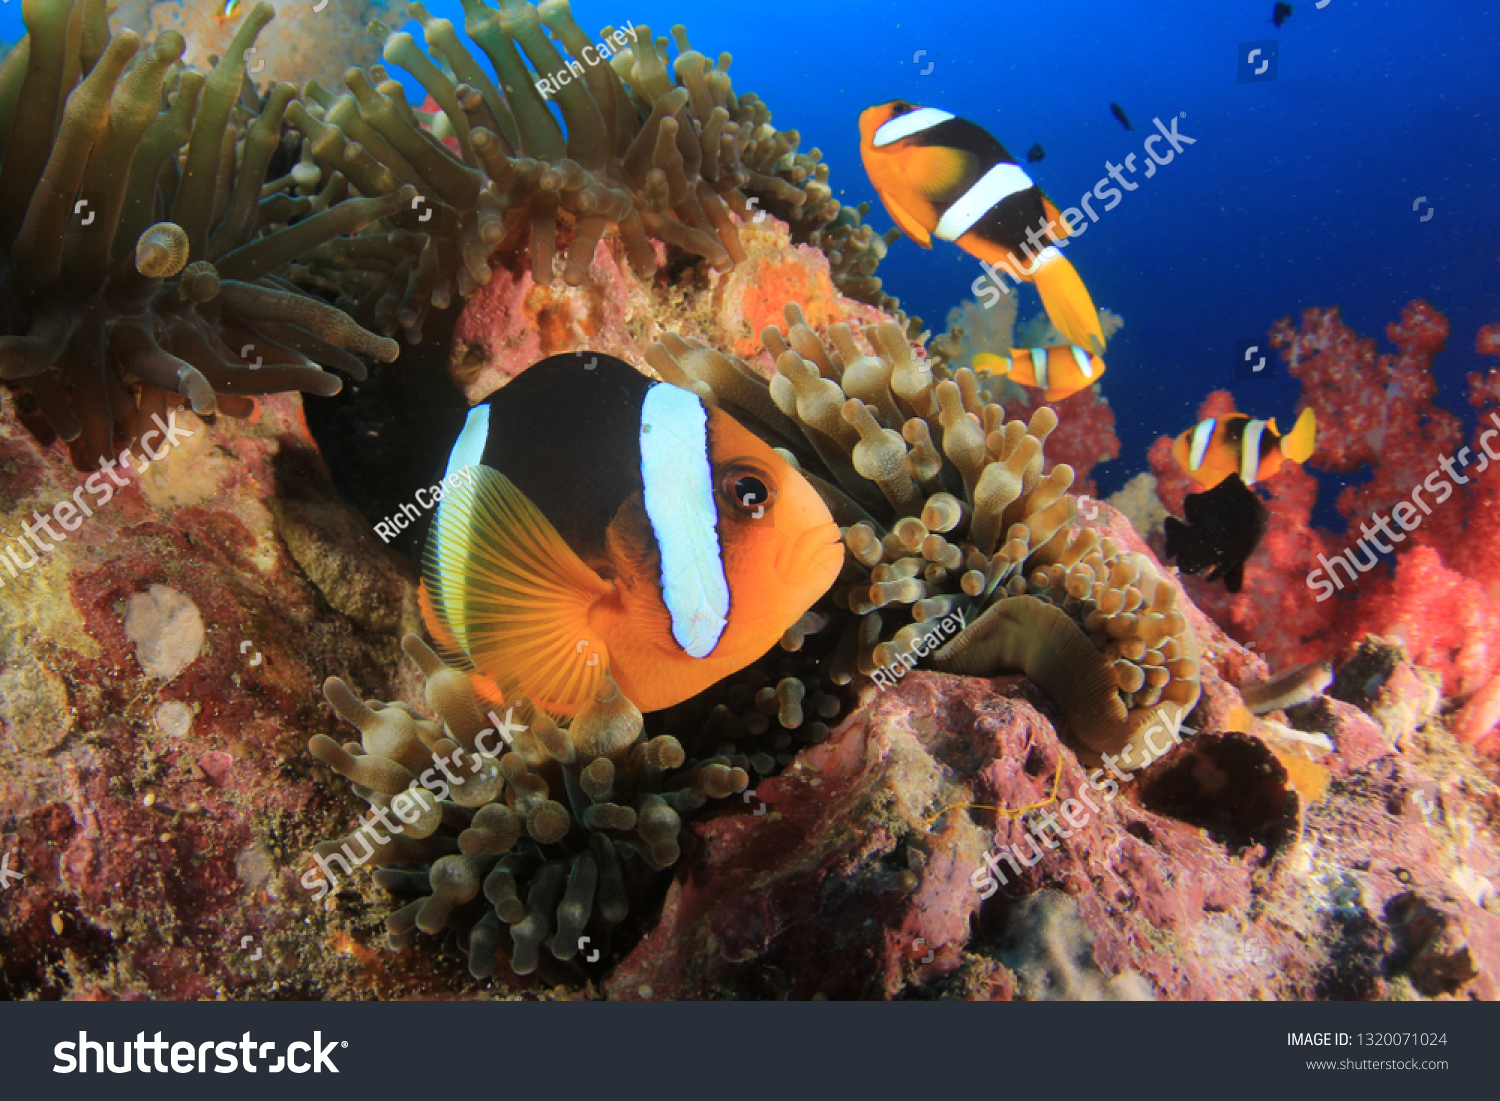 Clownfish anemonefish fish on coral reef  #1320071024